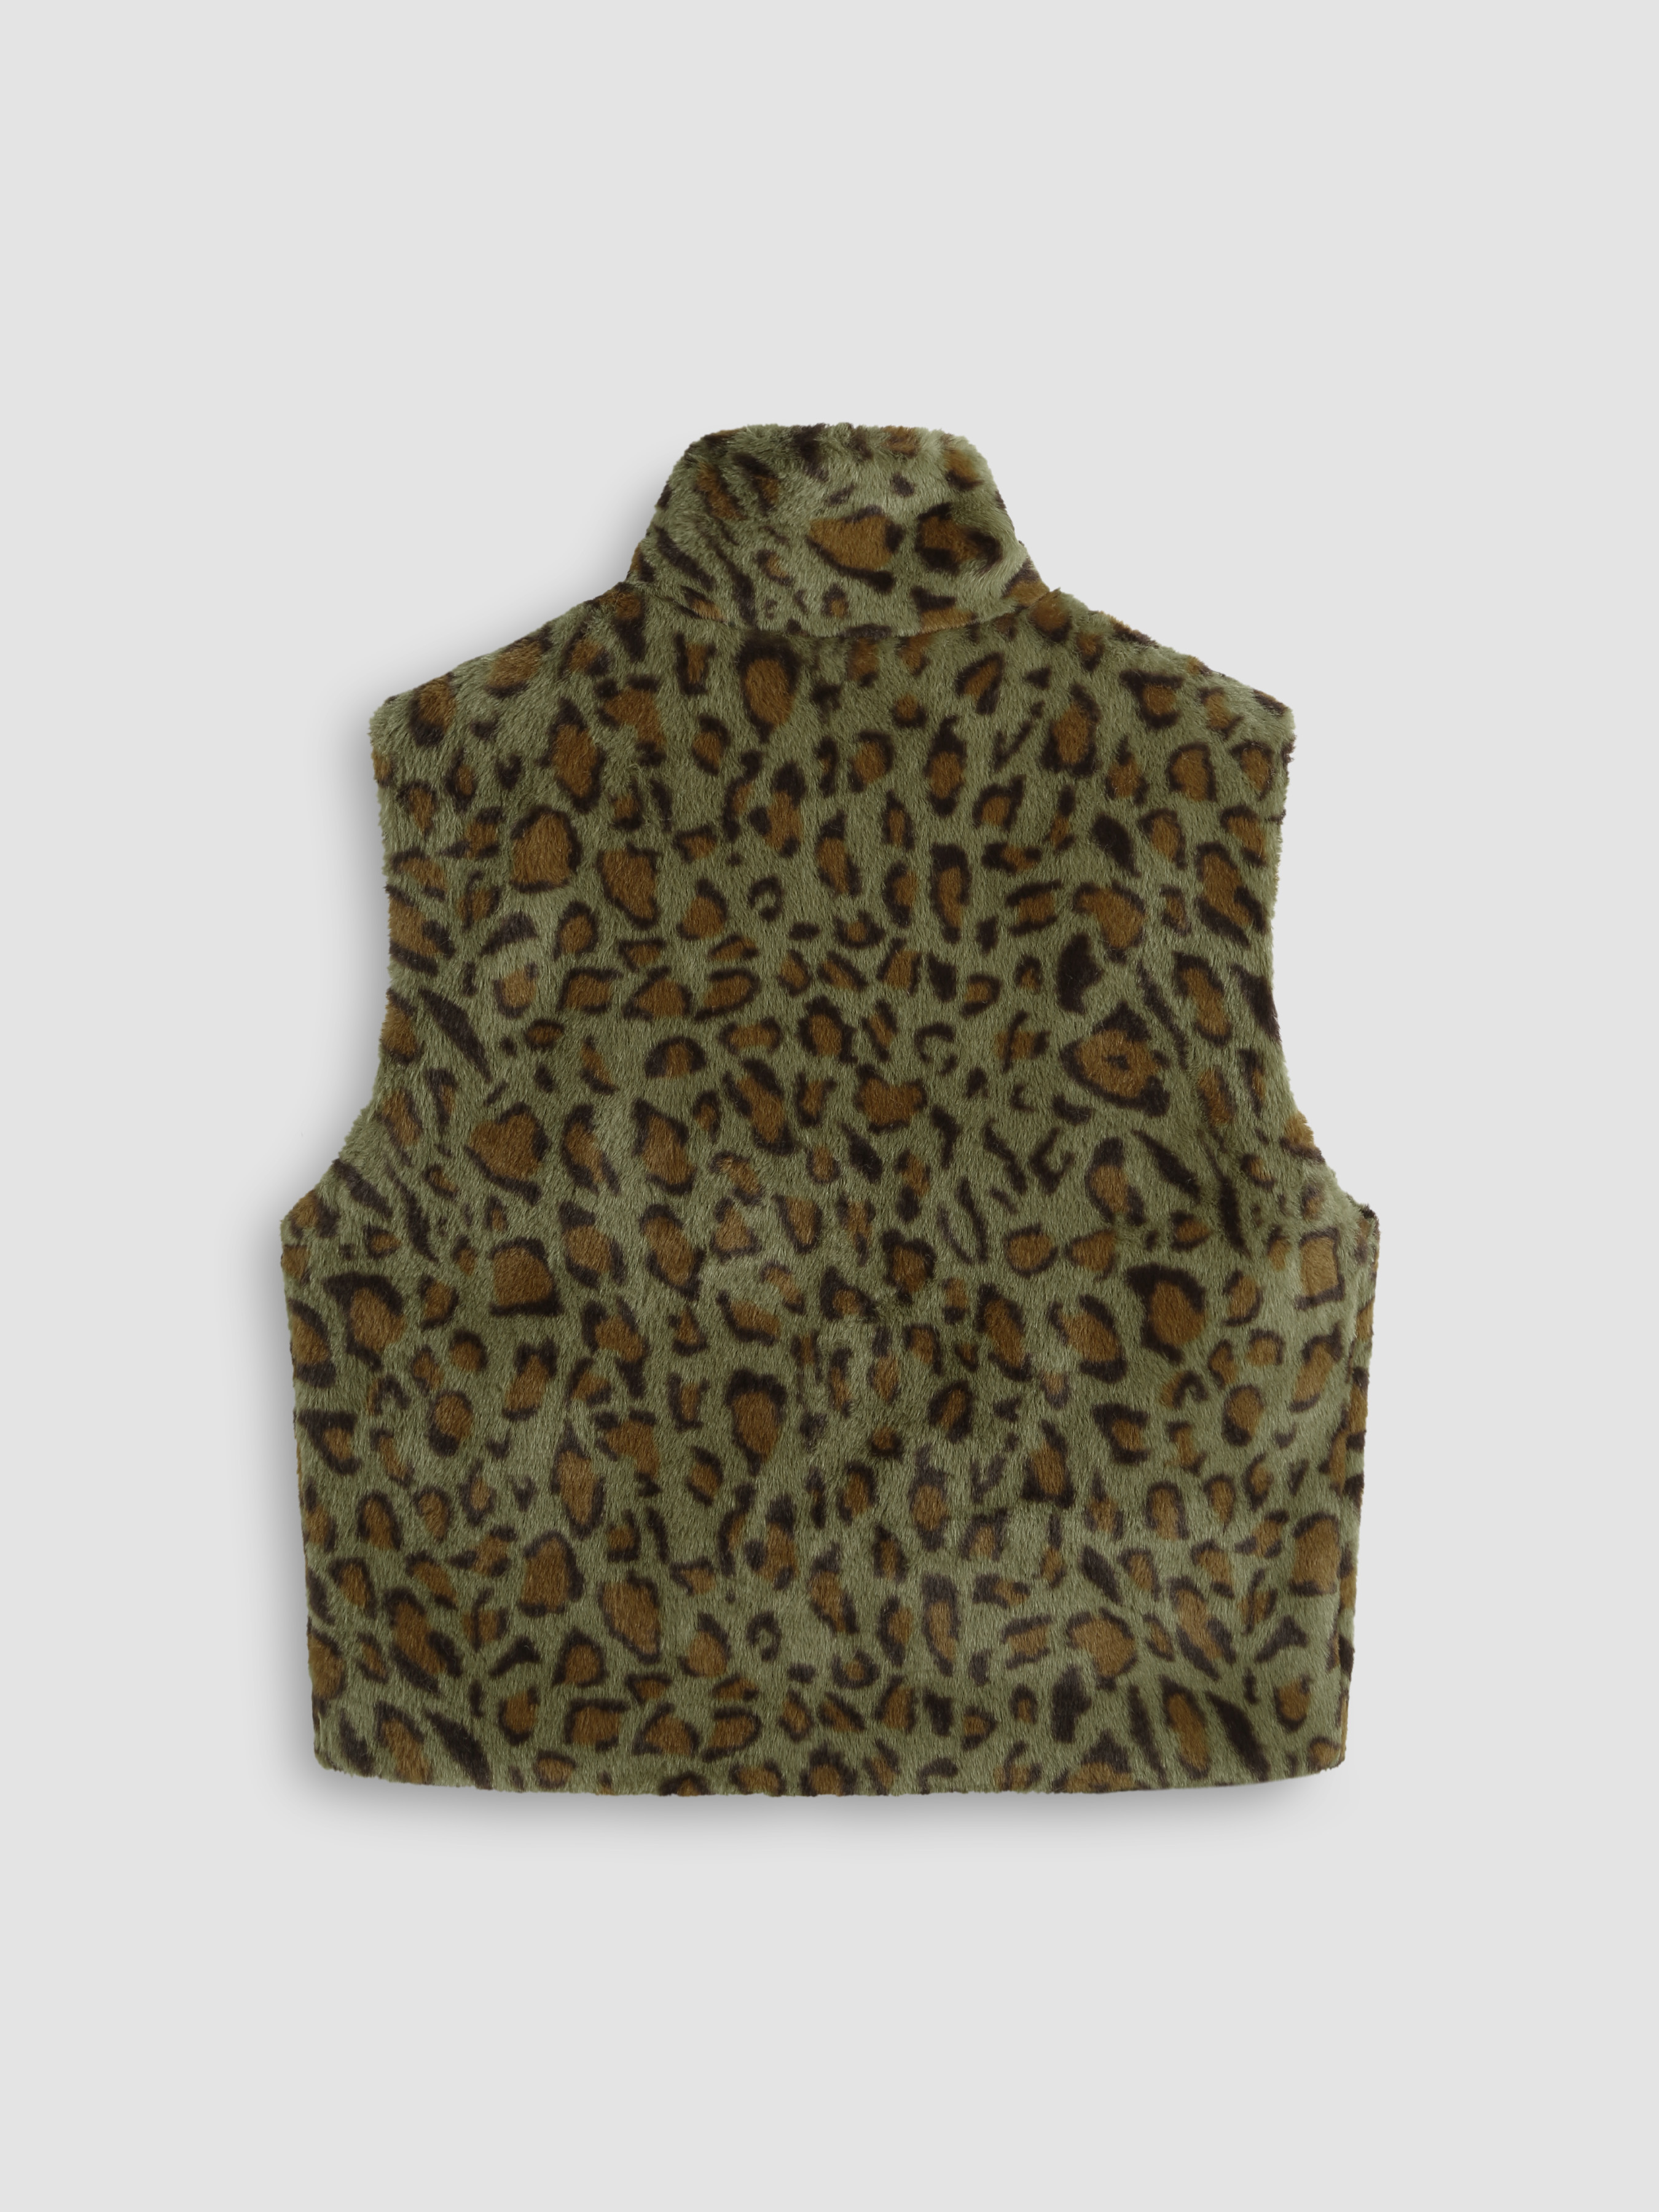 Leopard-print puffer vest